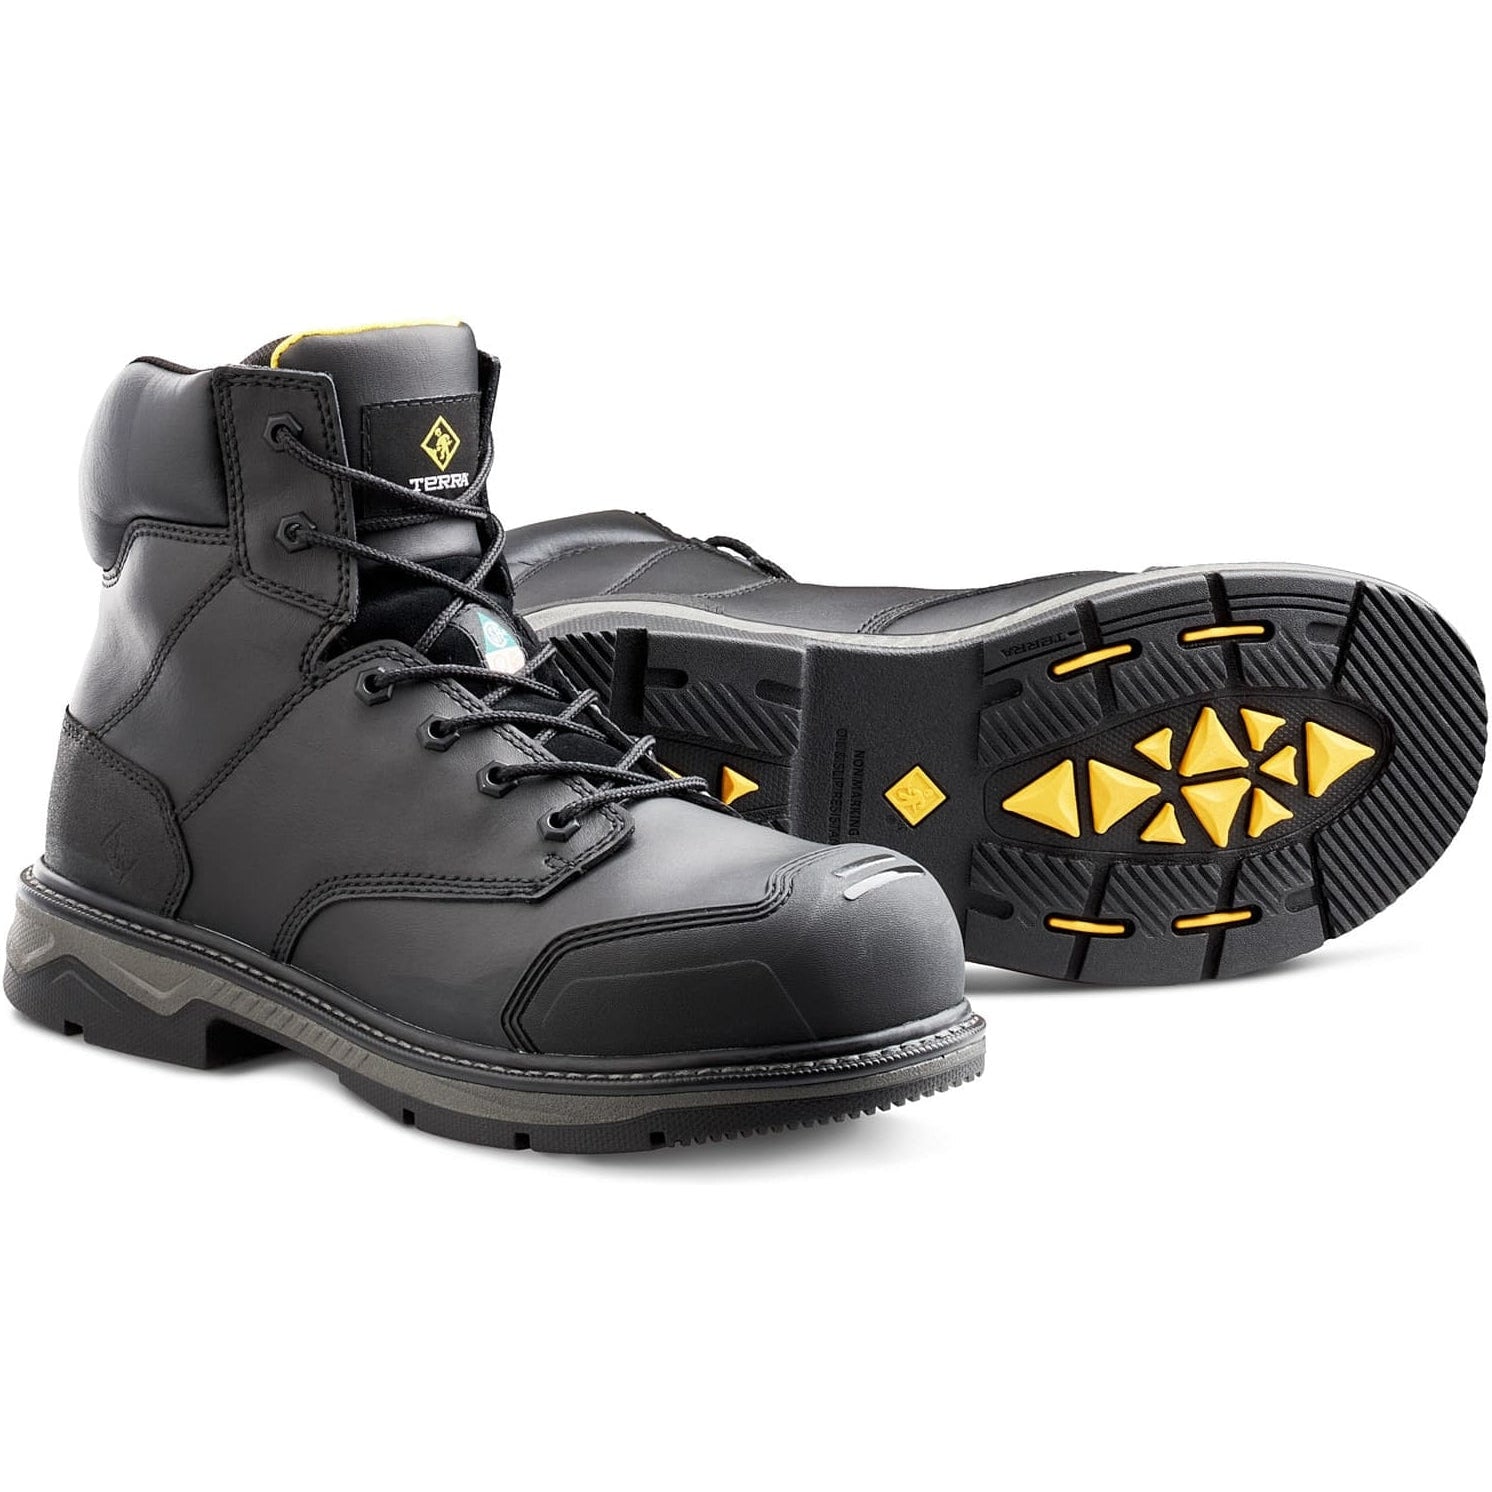 Terra Men's Patton 6" AT Waterproof Safety Work Boot -Black- 4NS6BK  - Overlook Boots